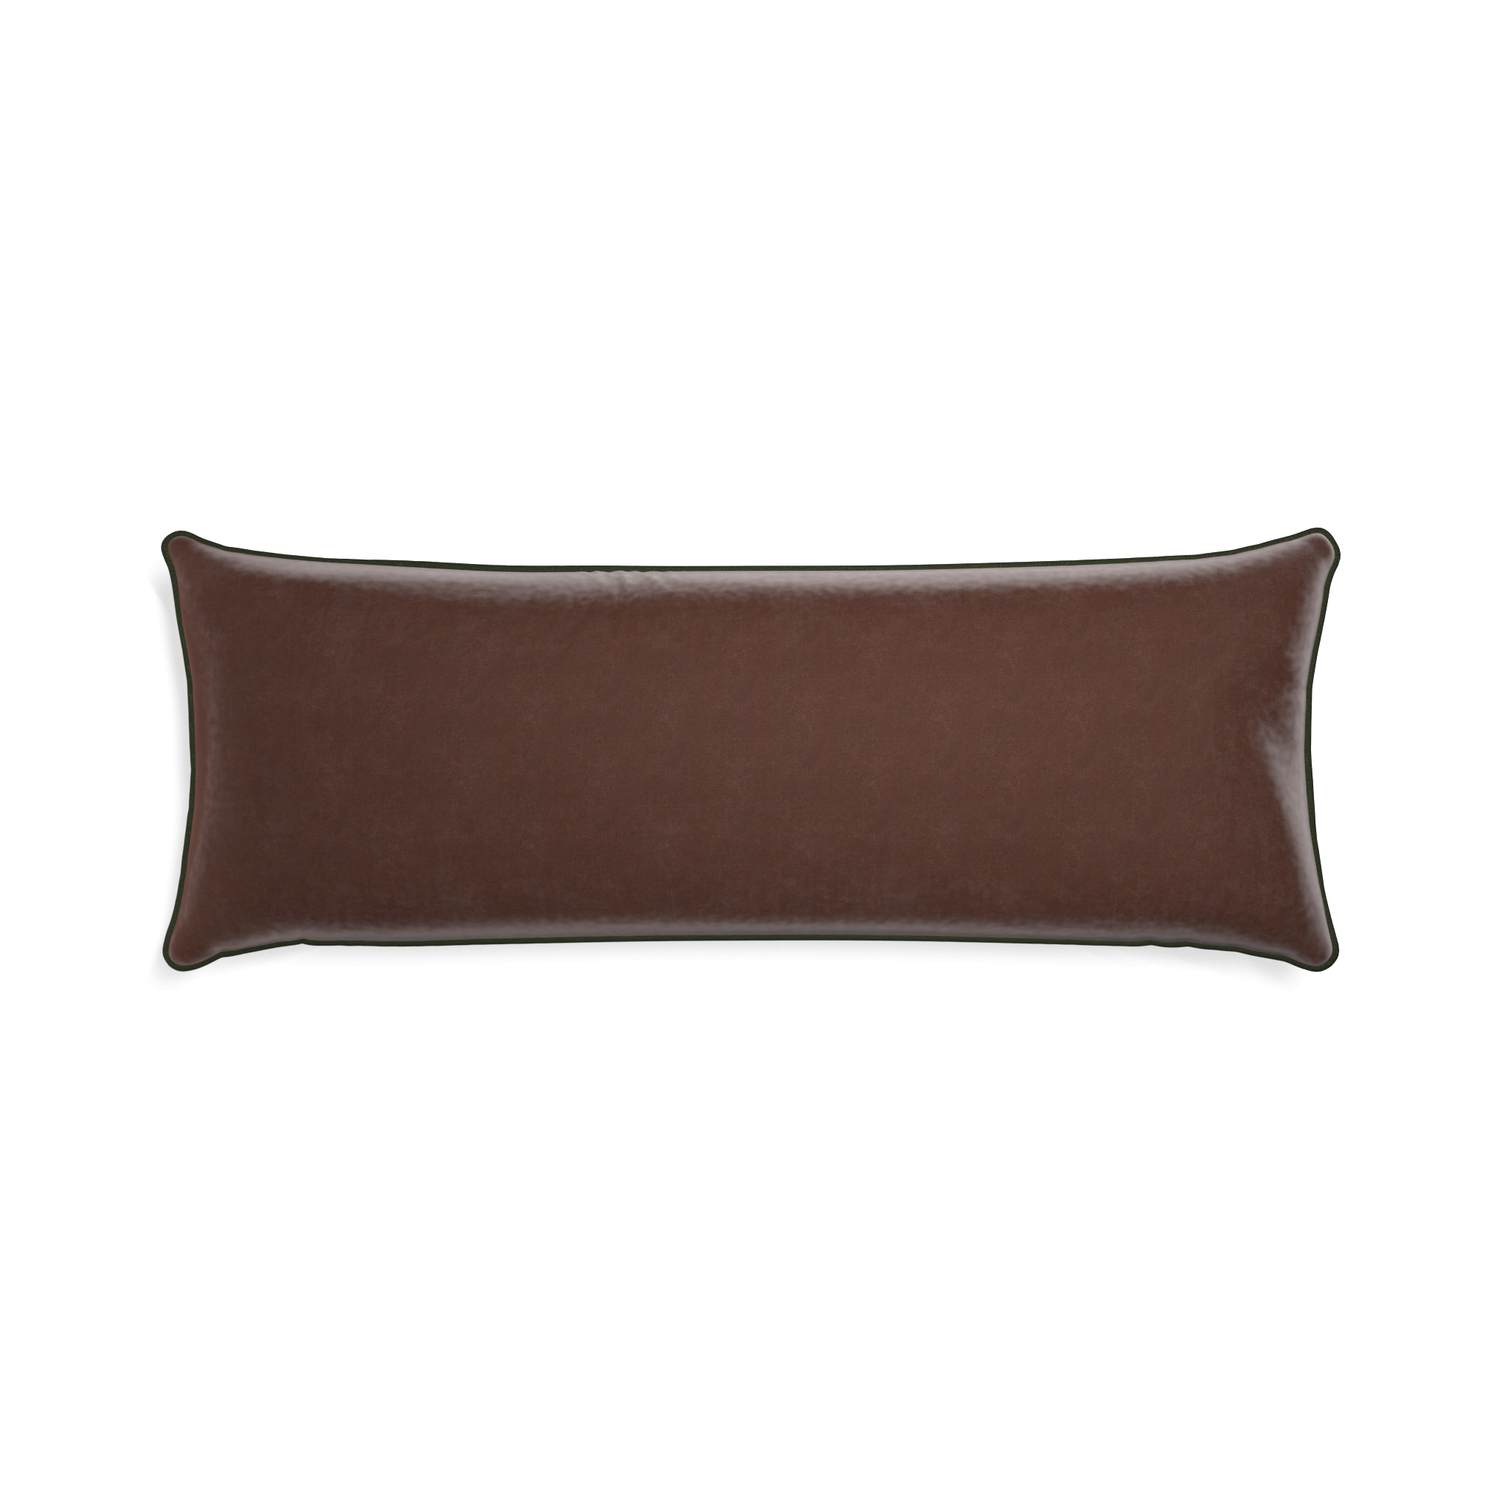 Xl-lumbar walnut velvet custom pillow with f piping on white background